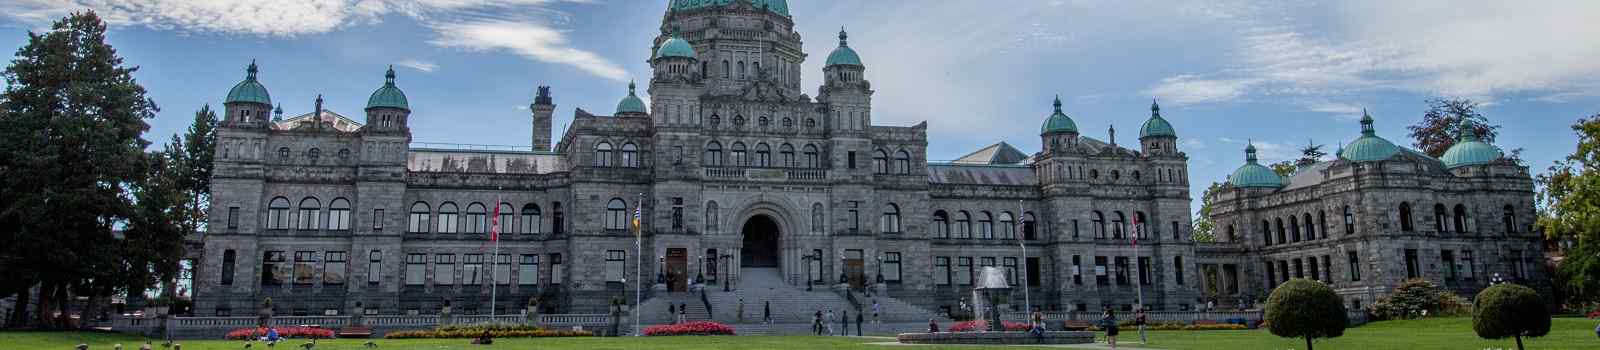 Parliament Building in Victoria  BC shutterstock 526943521